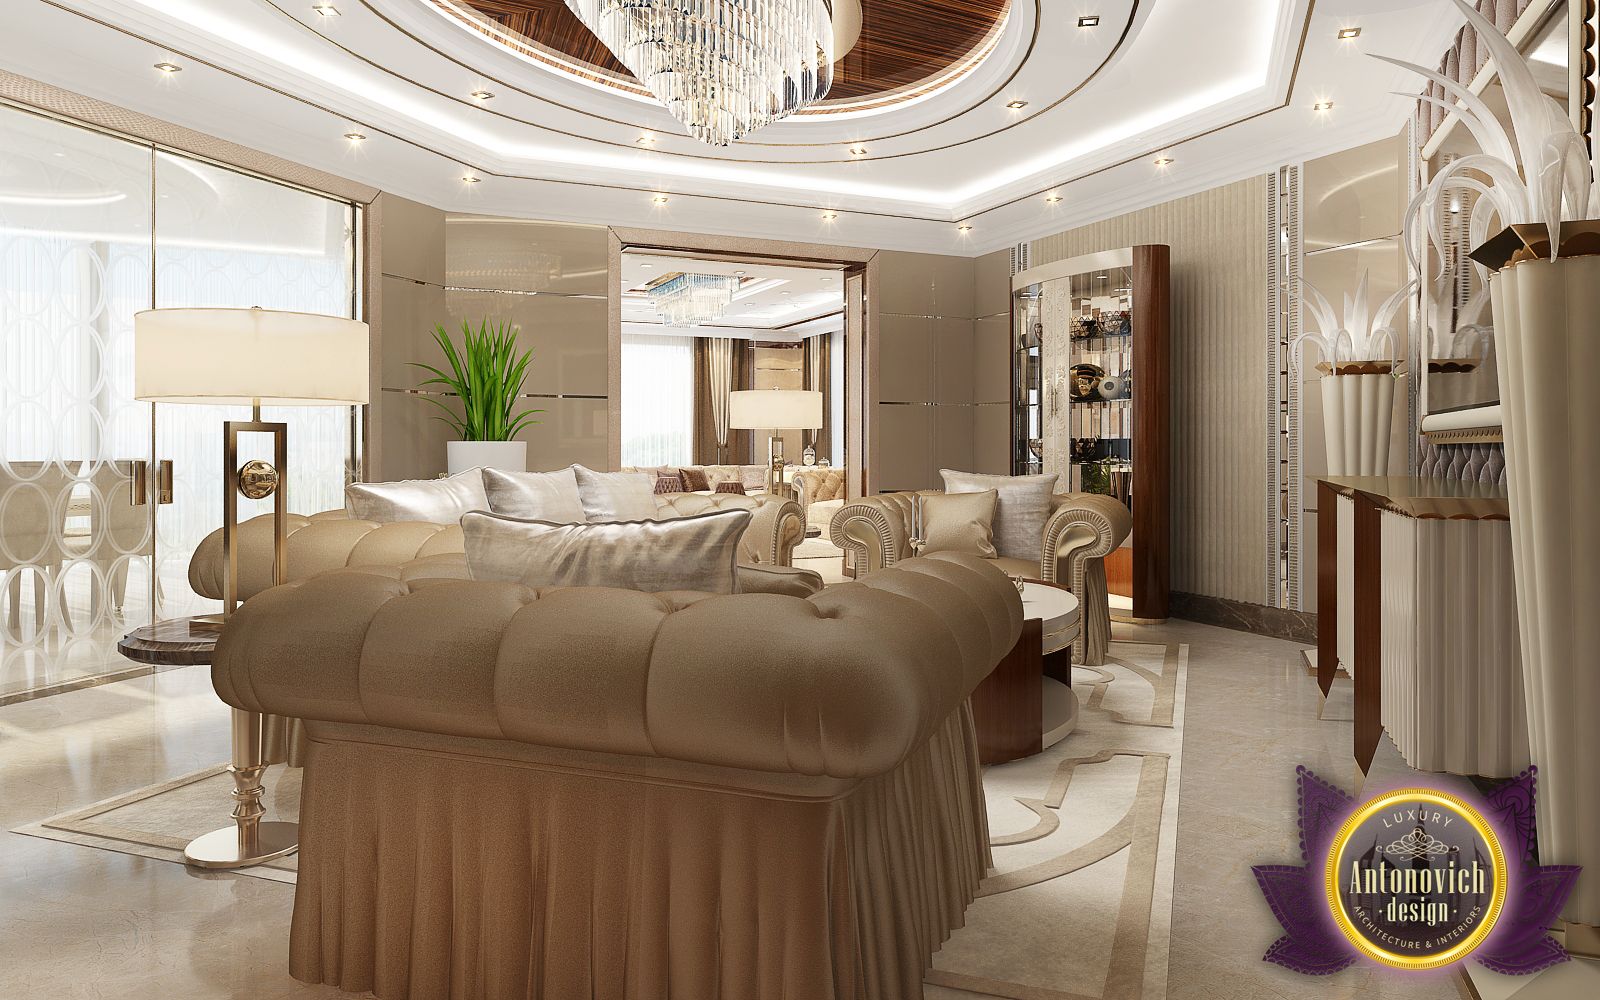 Elegant bedroom showcasing the talent of Africa's best interior designer